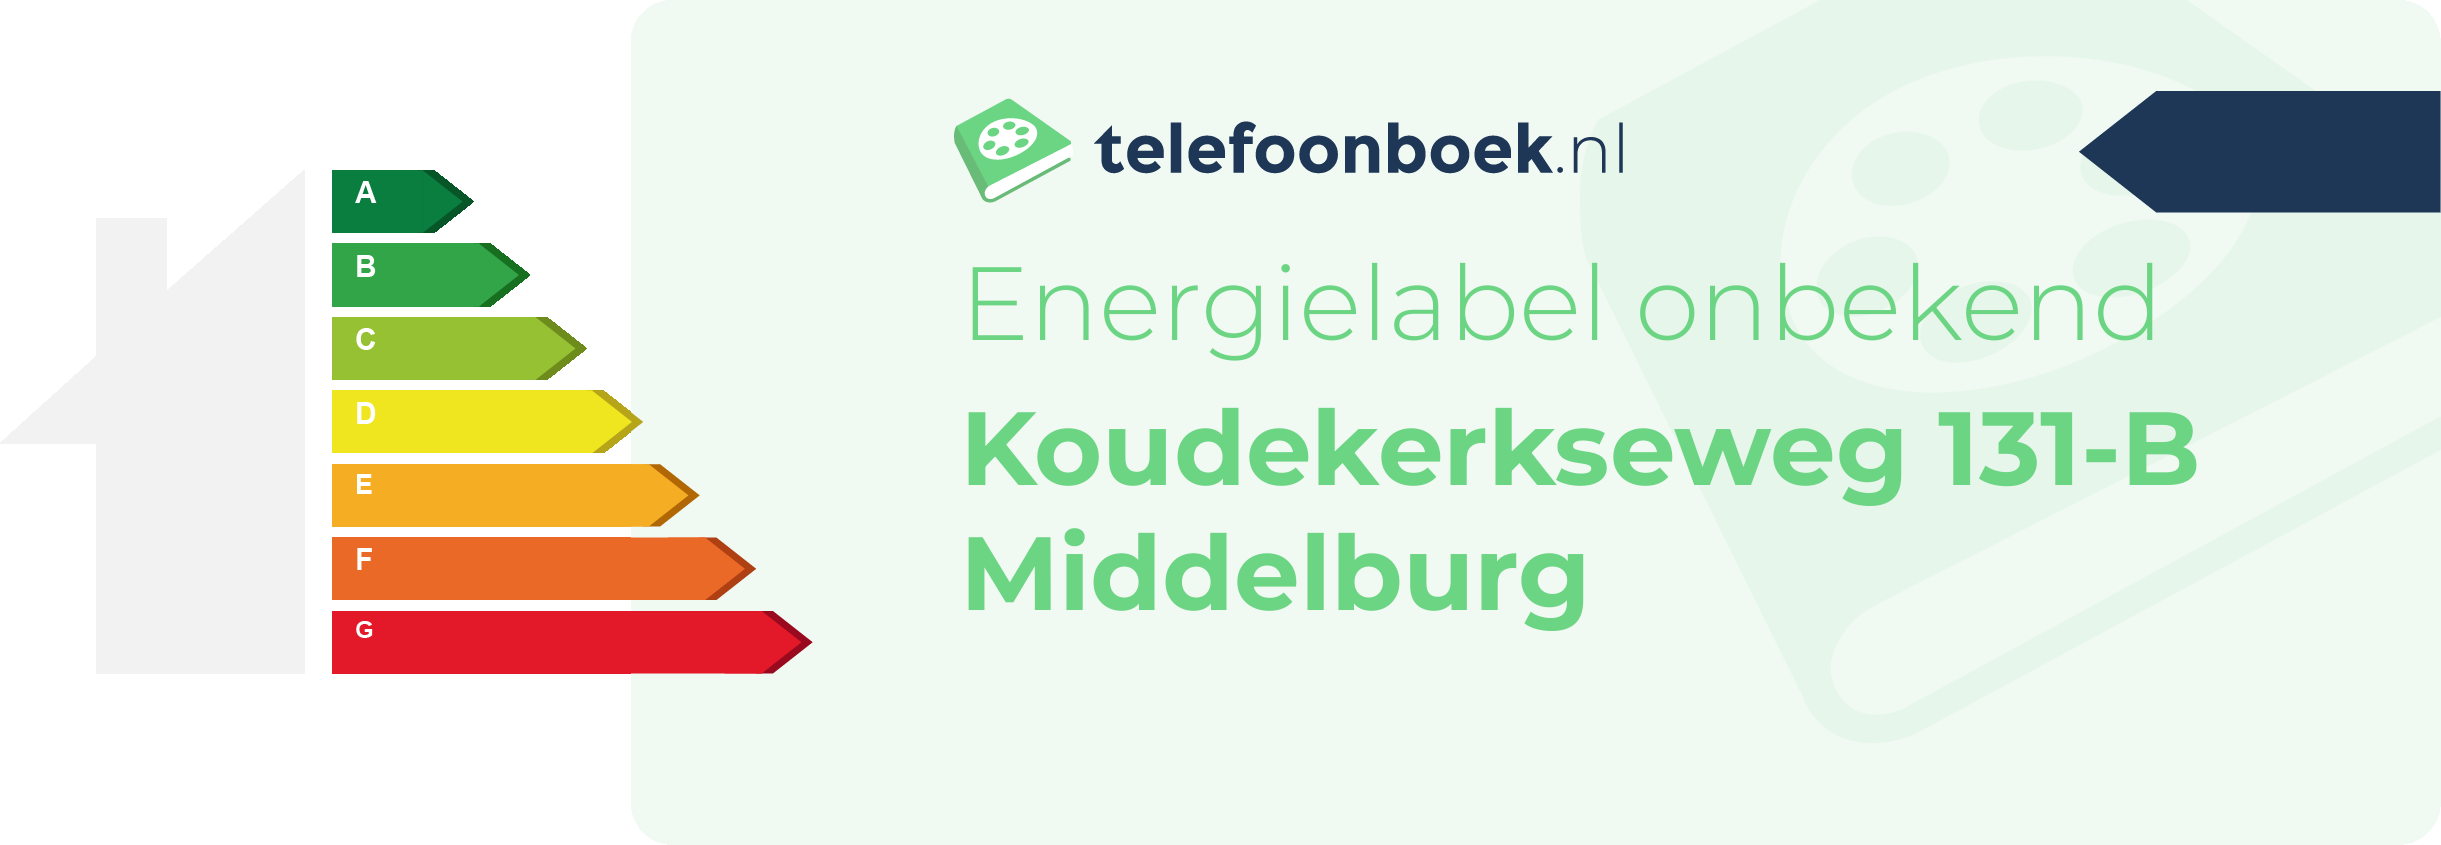 Energielabel Koudekerkseweg 131-B Middelburg